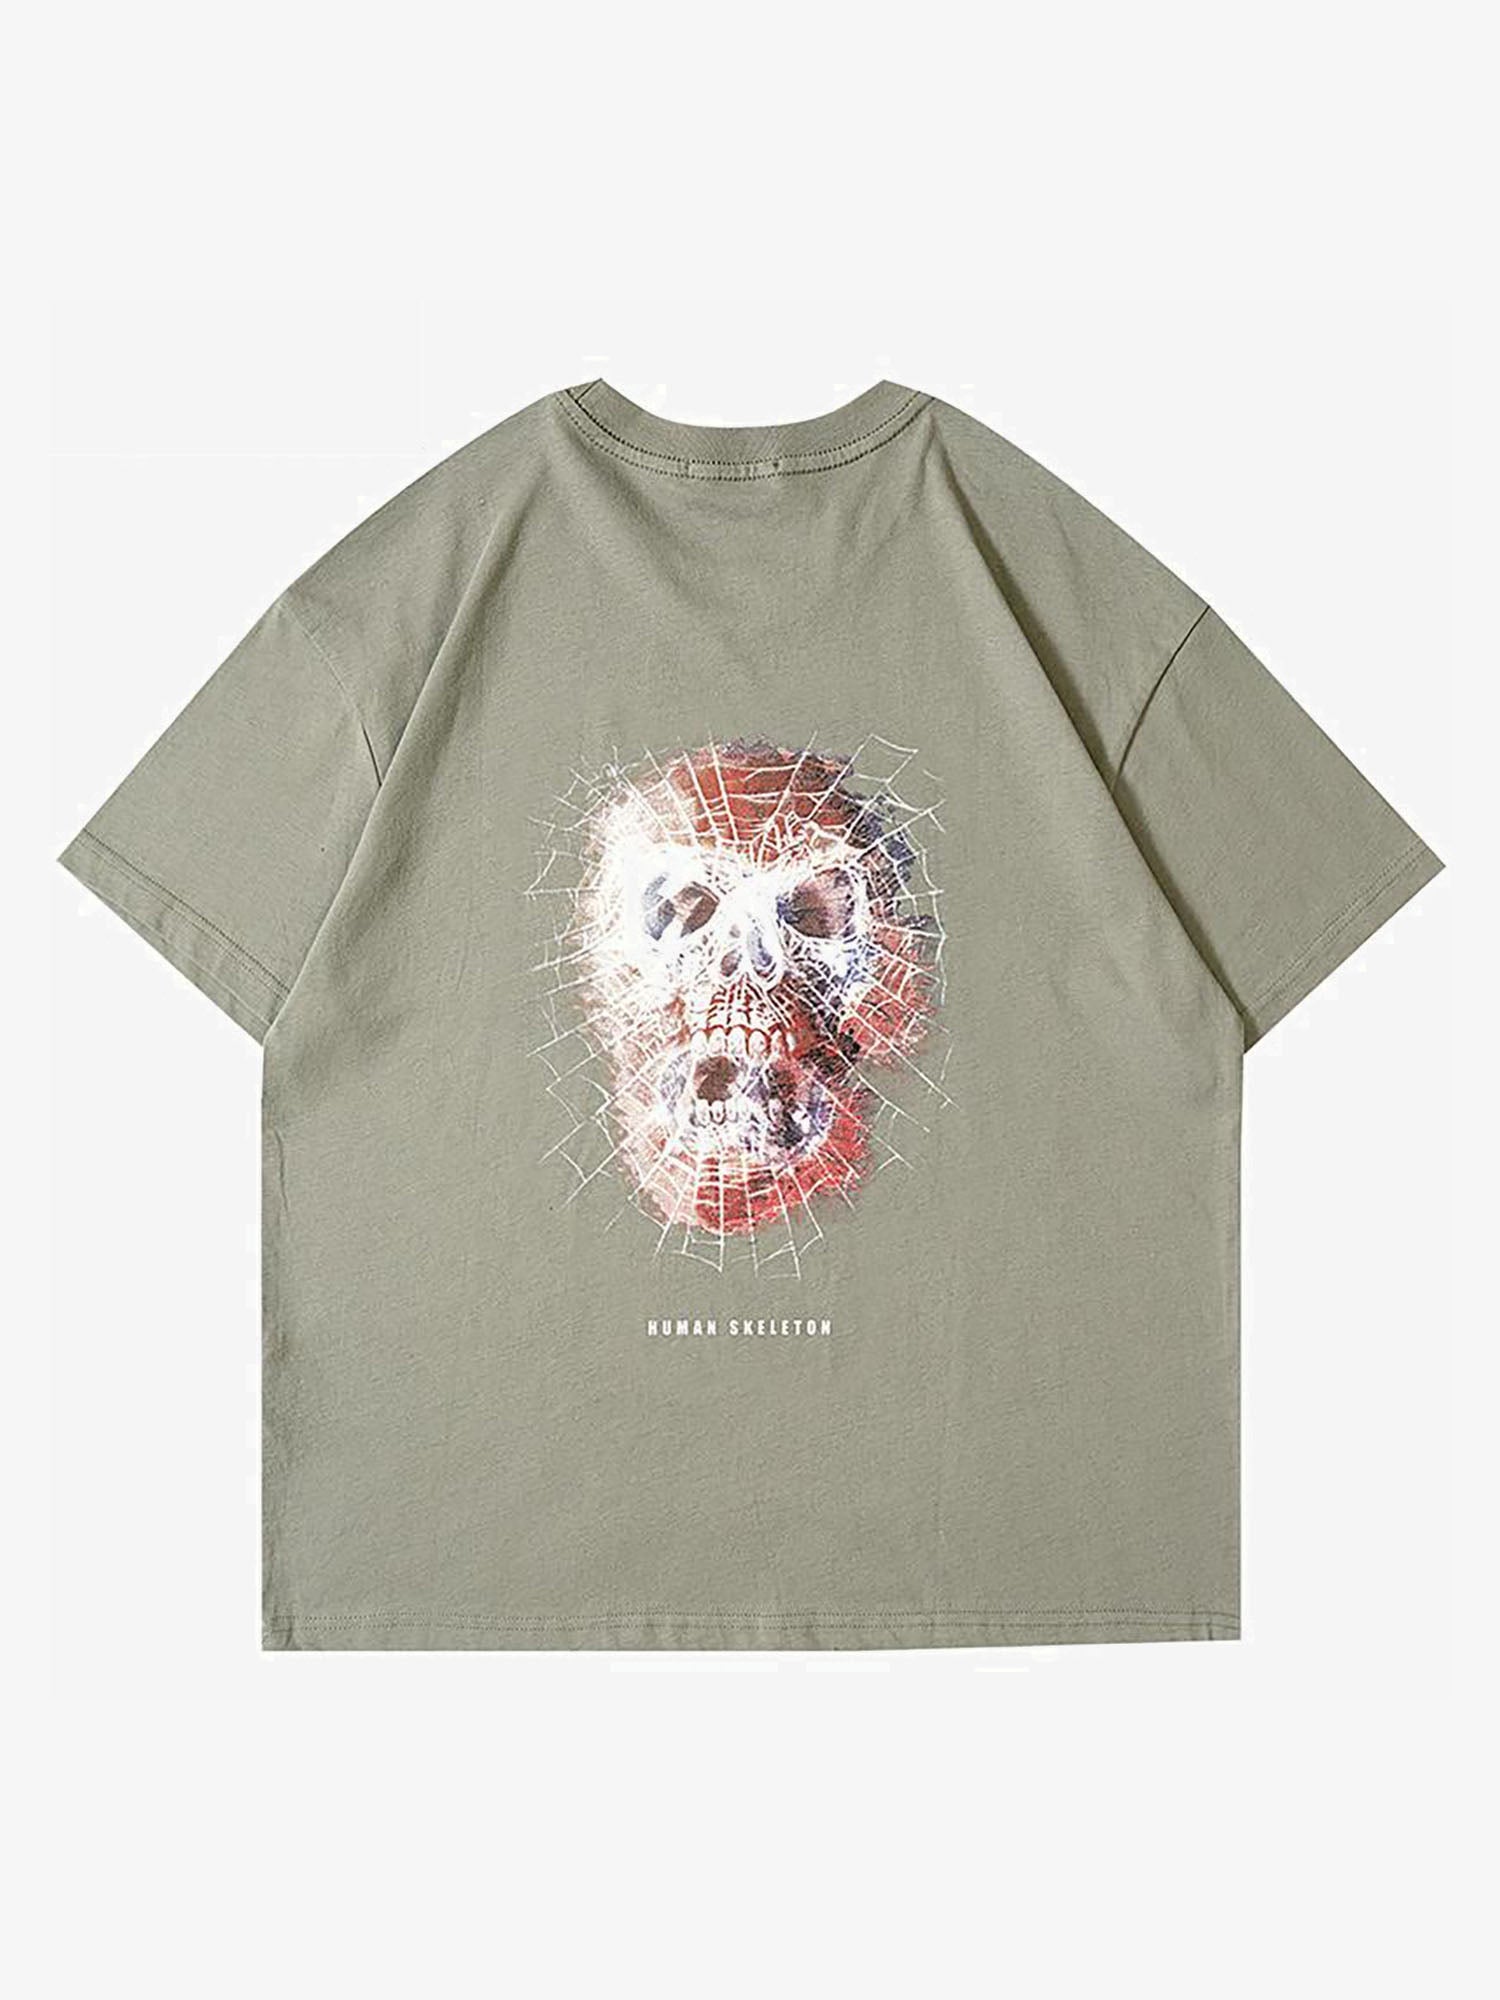 Justnotag Spider Webs Bind Flame Skull Kurzarm-T-Shirt